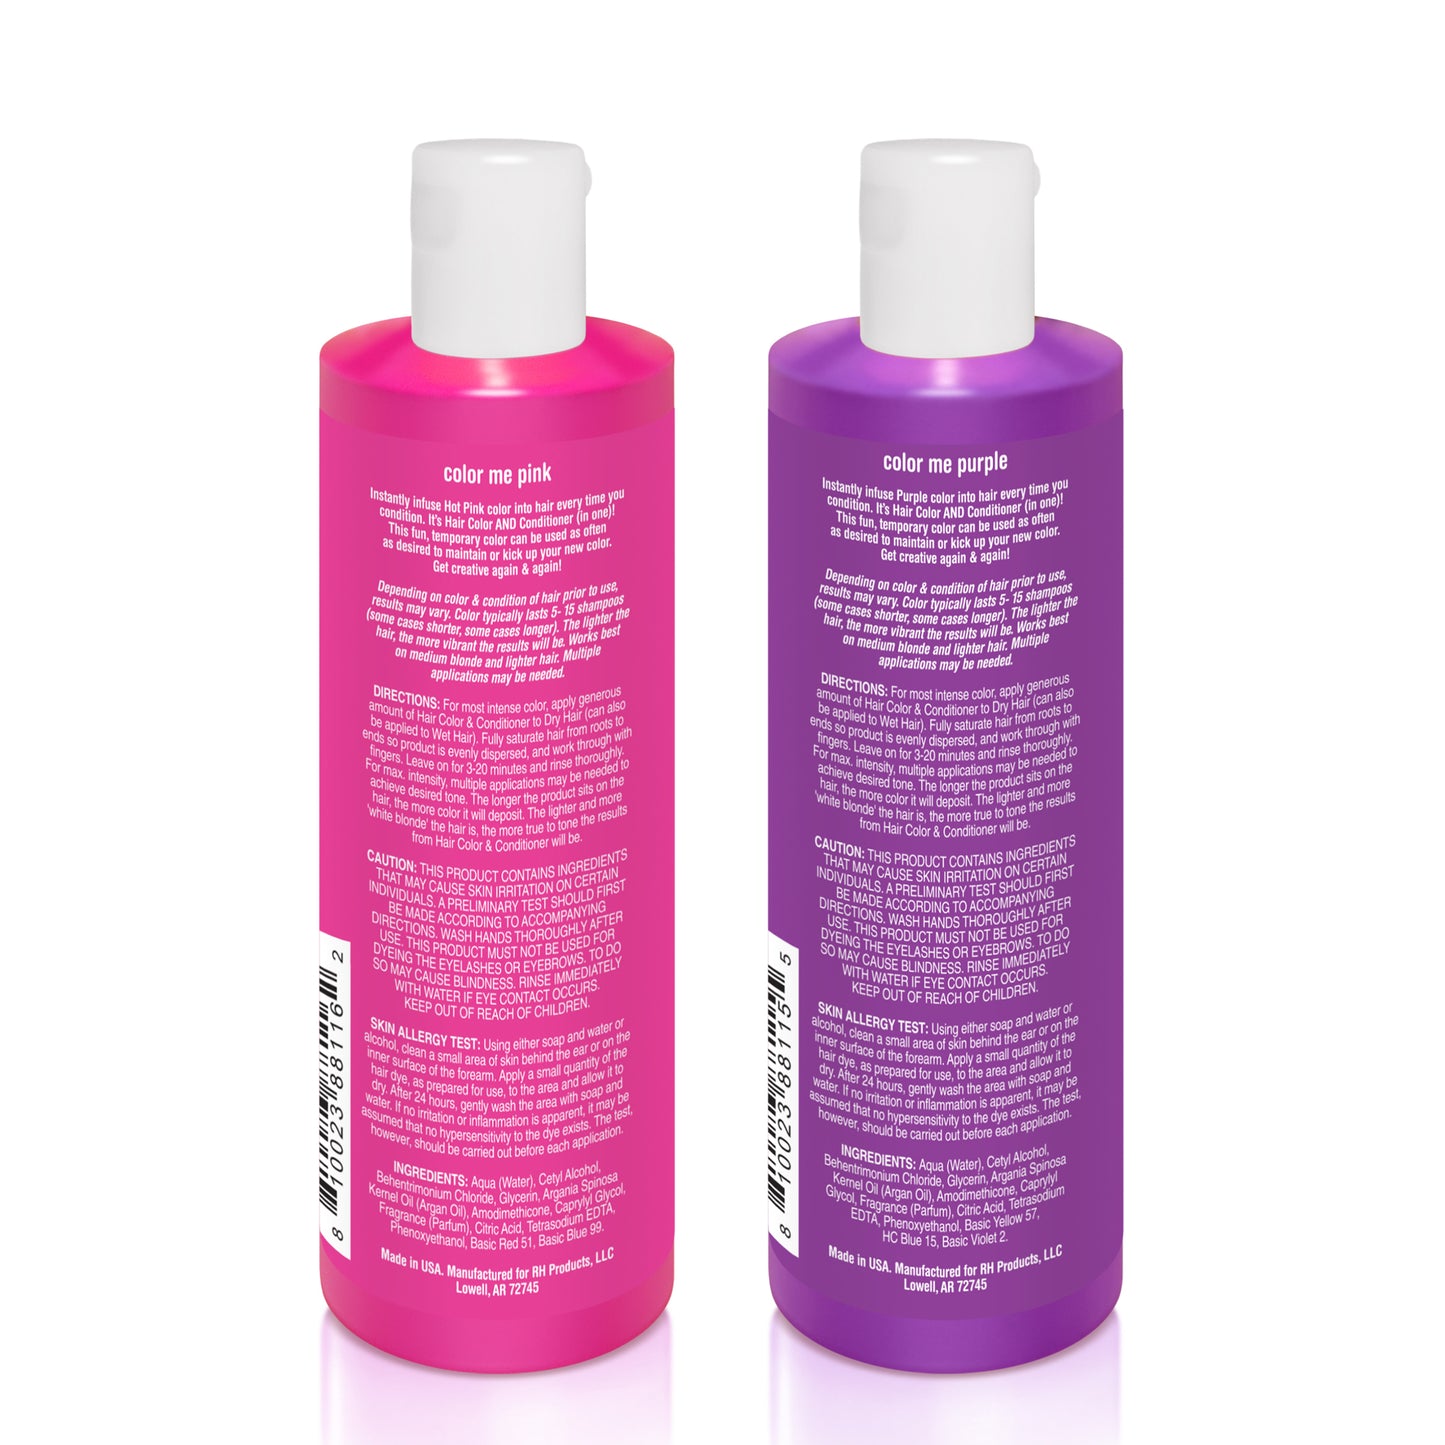 Hair Color & Conditioner - 2 Pack Bundle - Hot Pink & Purple